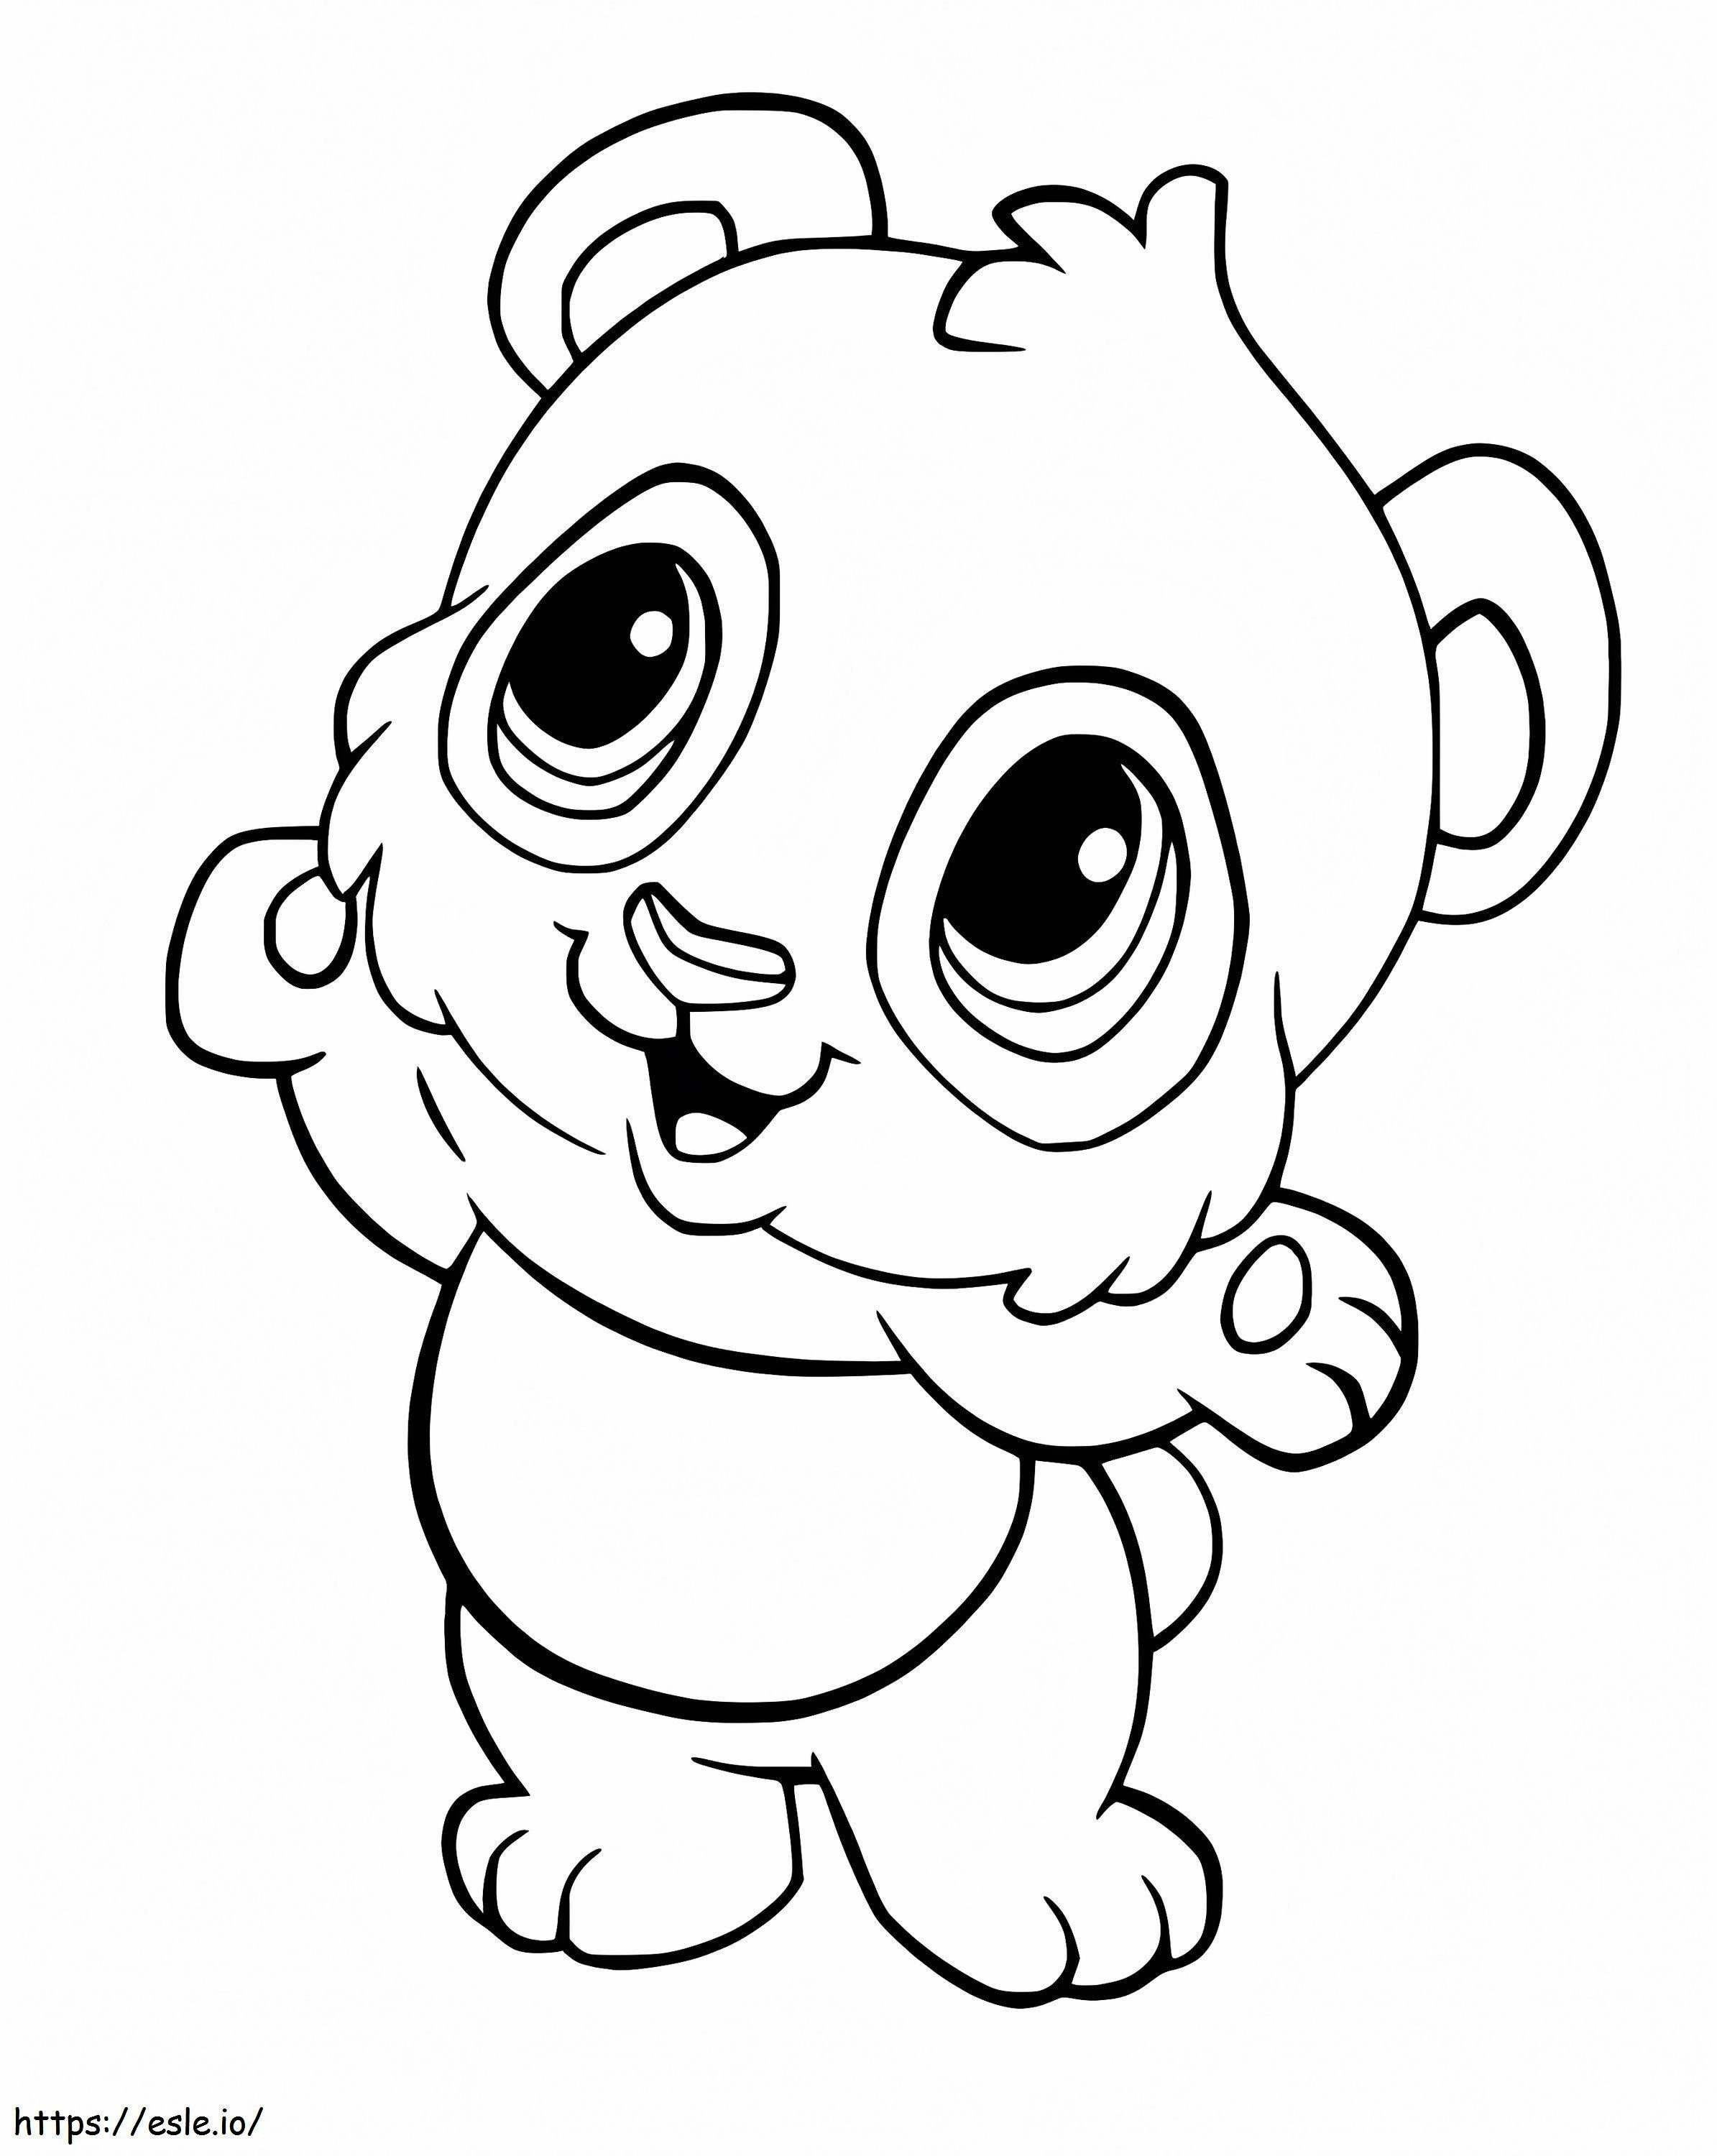 Fun Little Panda coloring page